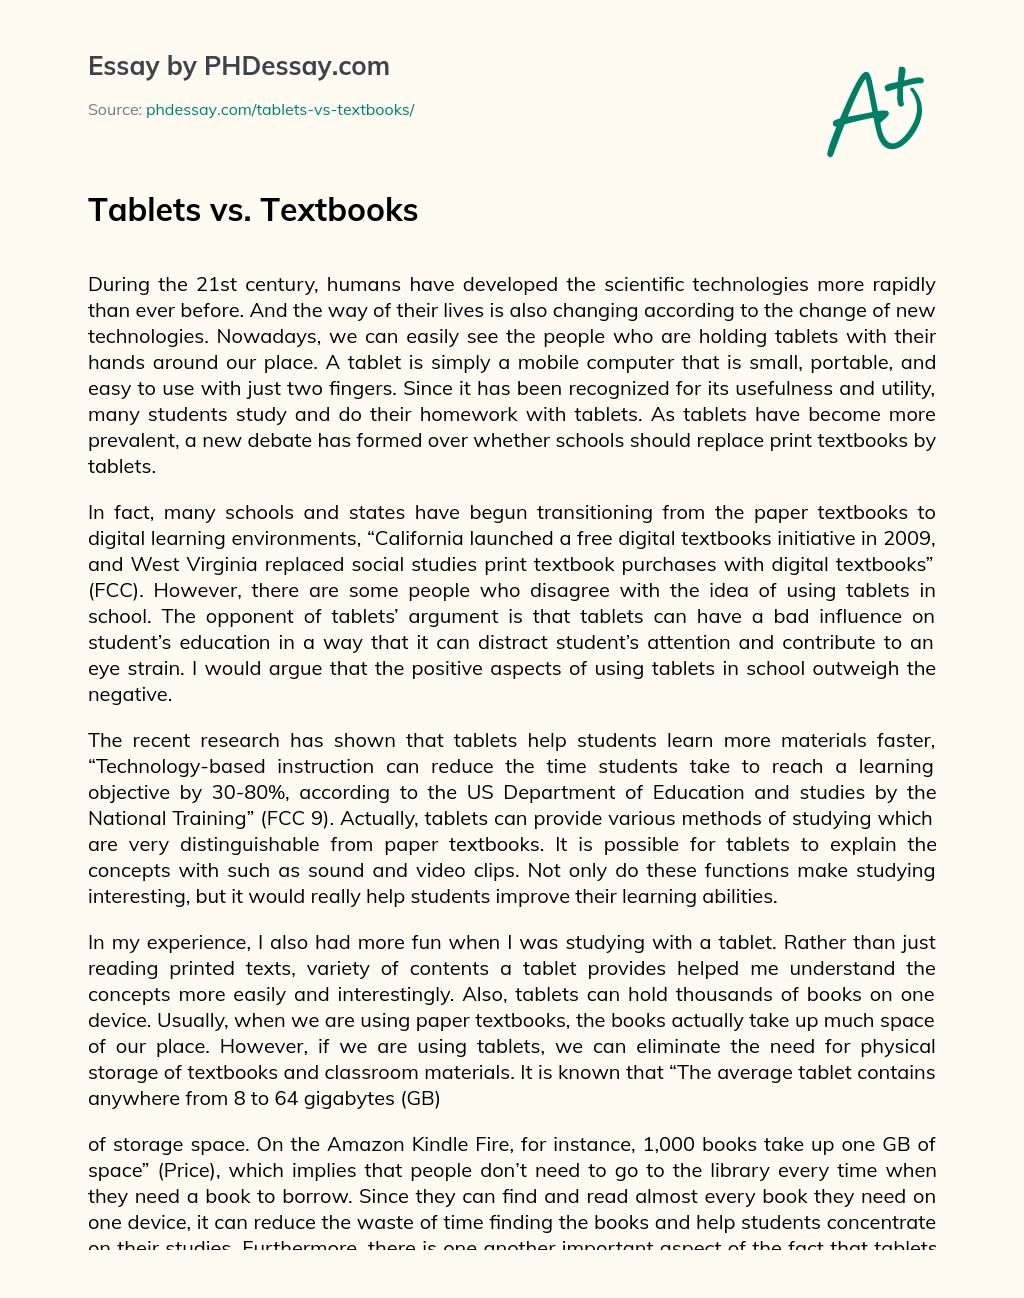 Tablets vs. Textbooks essay